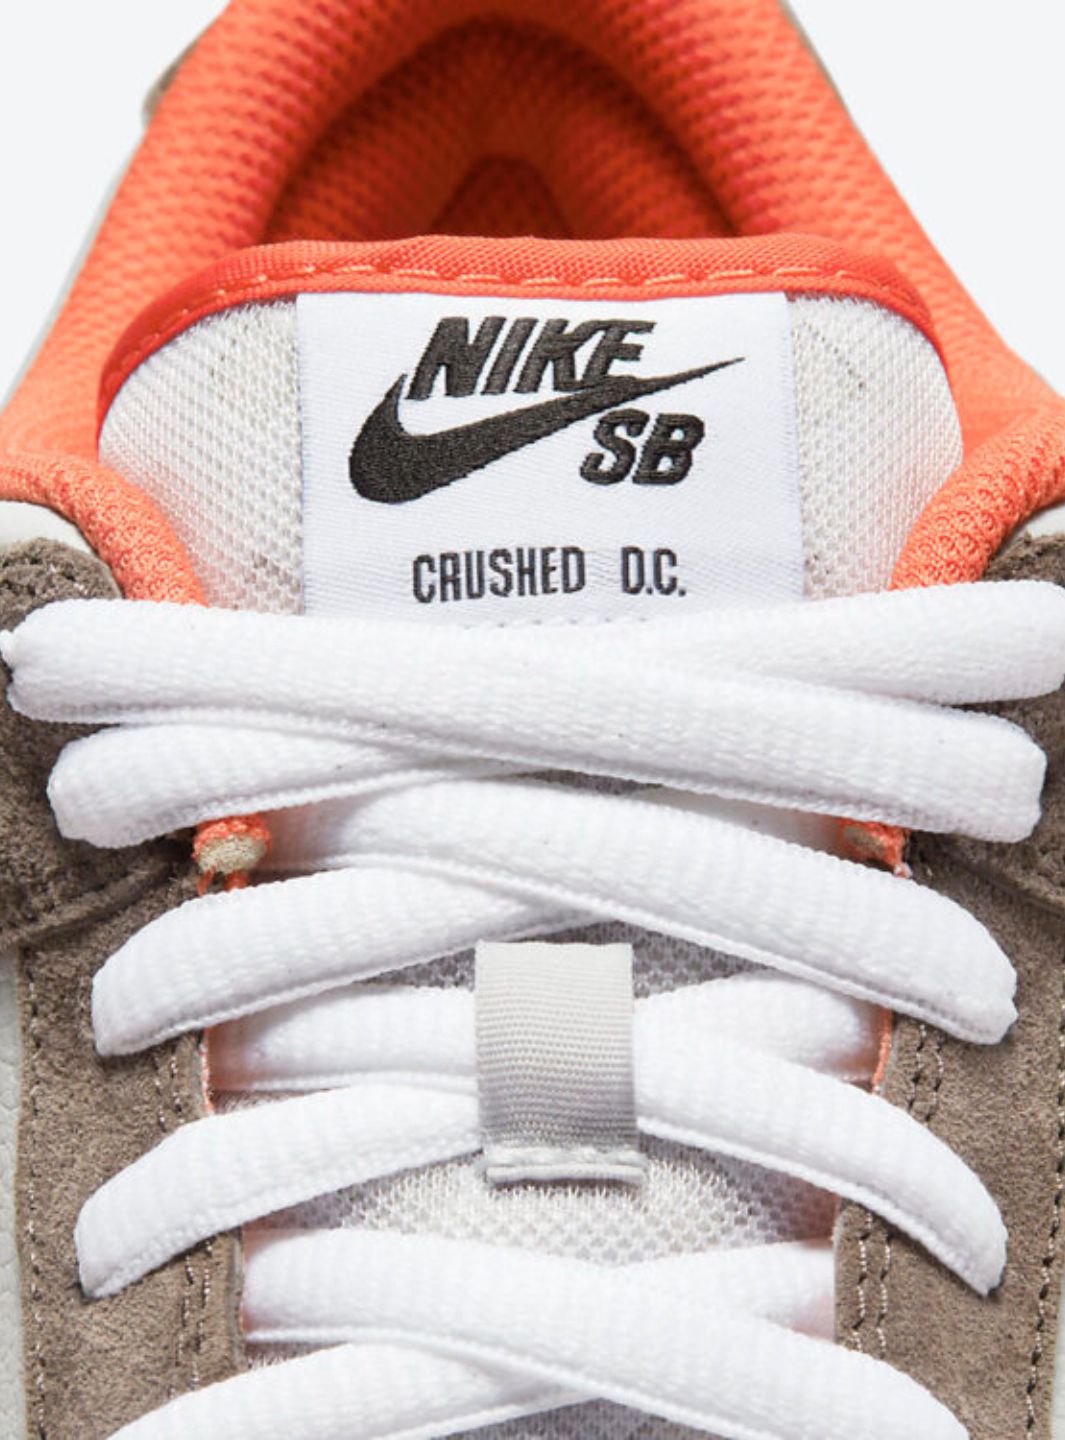 Nike SB Dunk Low Crushed D.C.